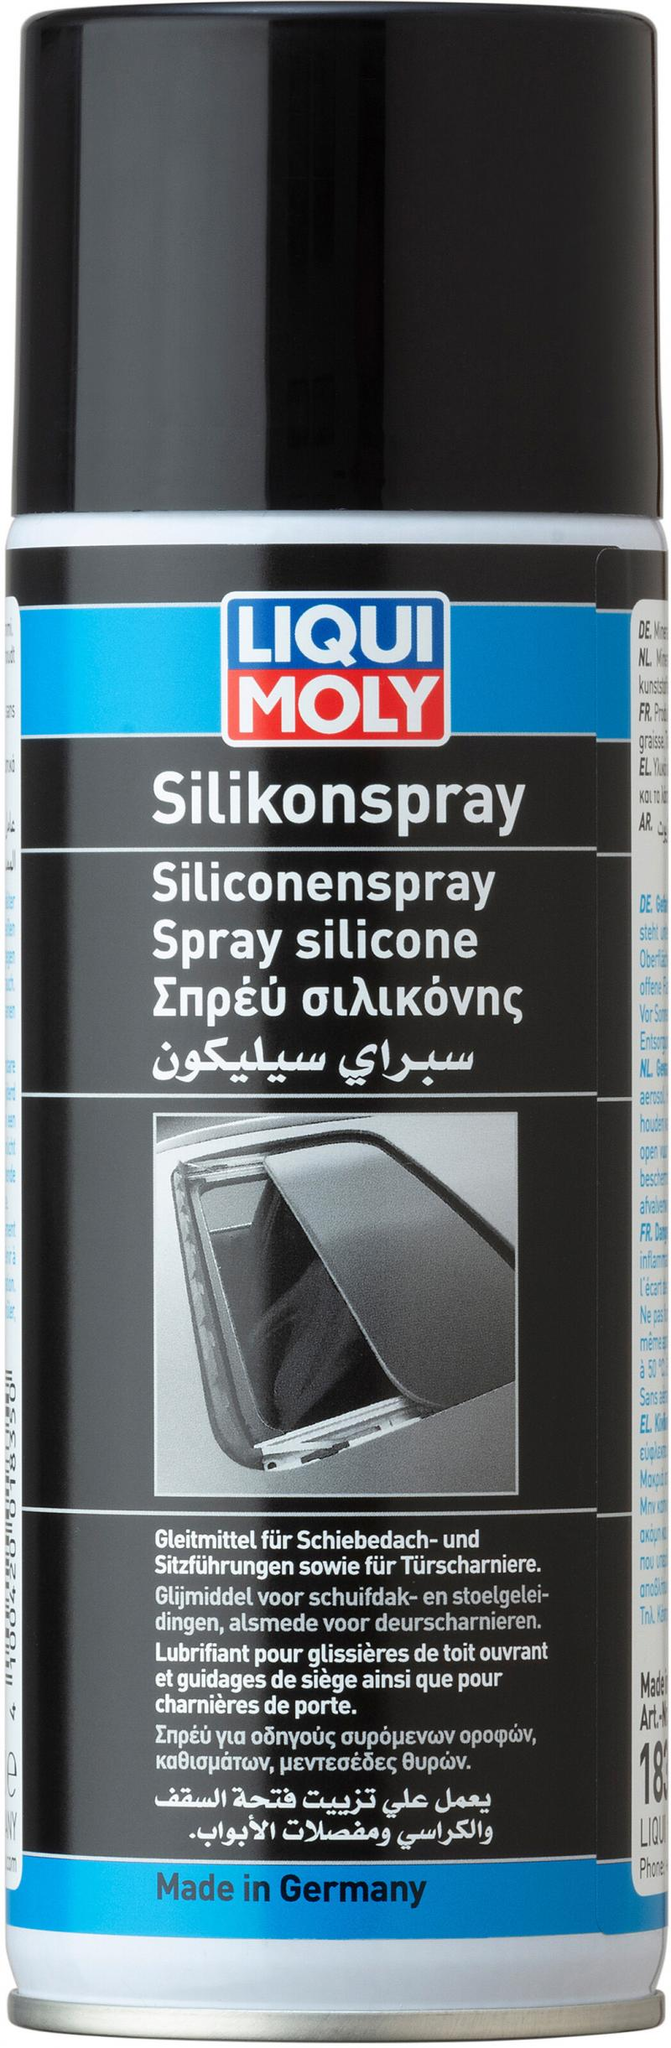 Liqui Moly Haftschmierspray, Wd 40 Silikonspray, Schlossspray